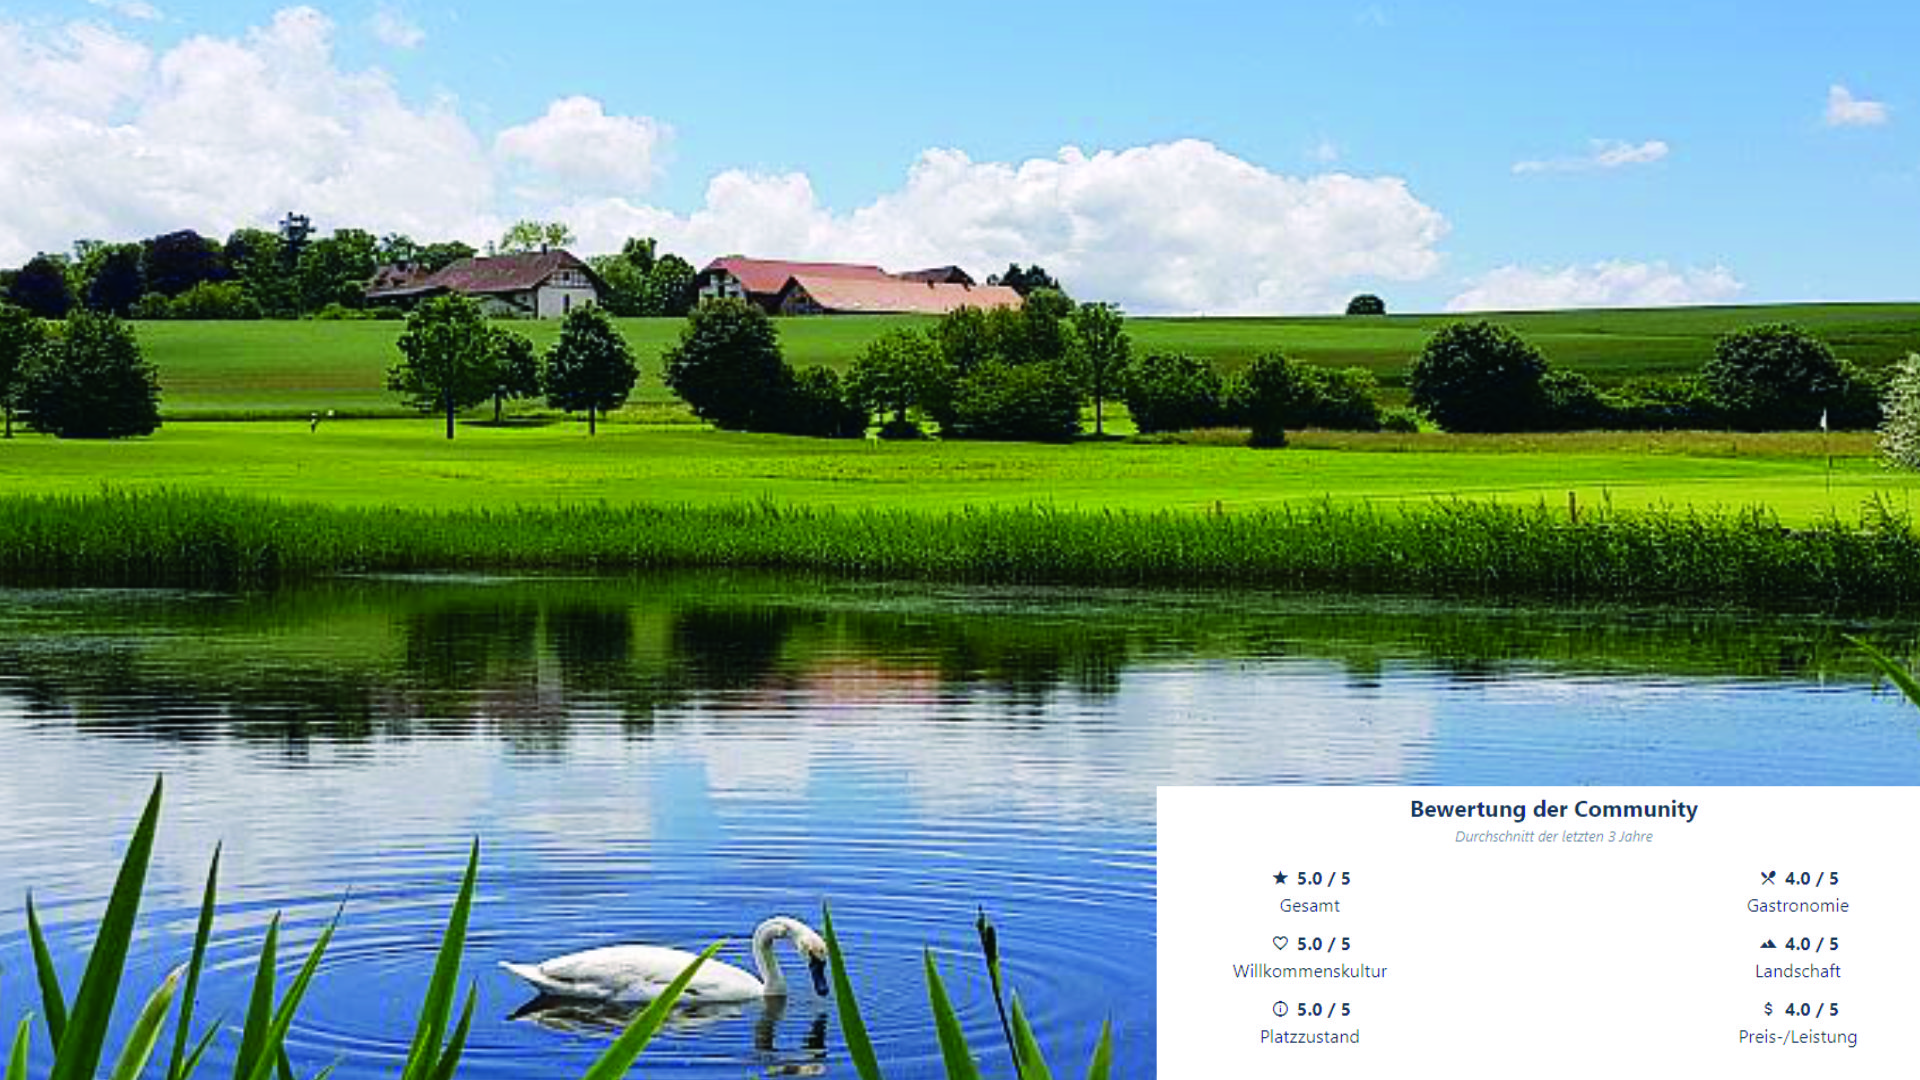 Der Golfpark Moossee belegt Platz 10 der besten Golfclubs. (Foto: Golfpark Moossee)